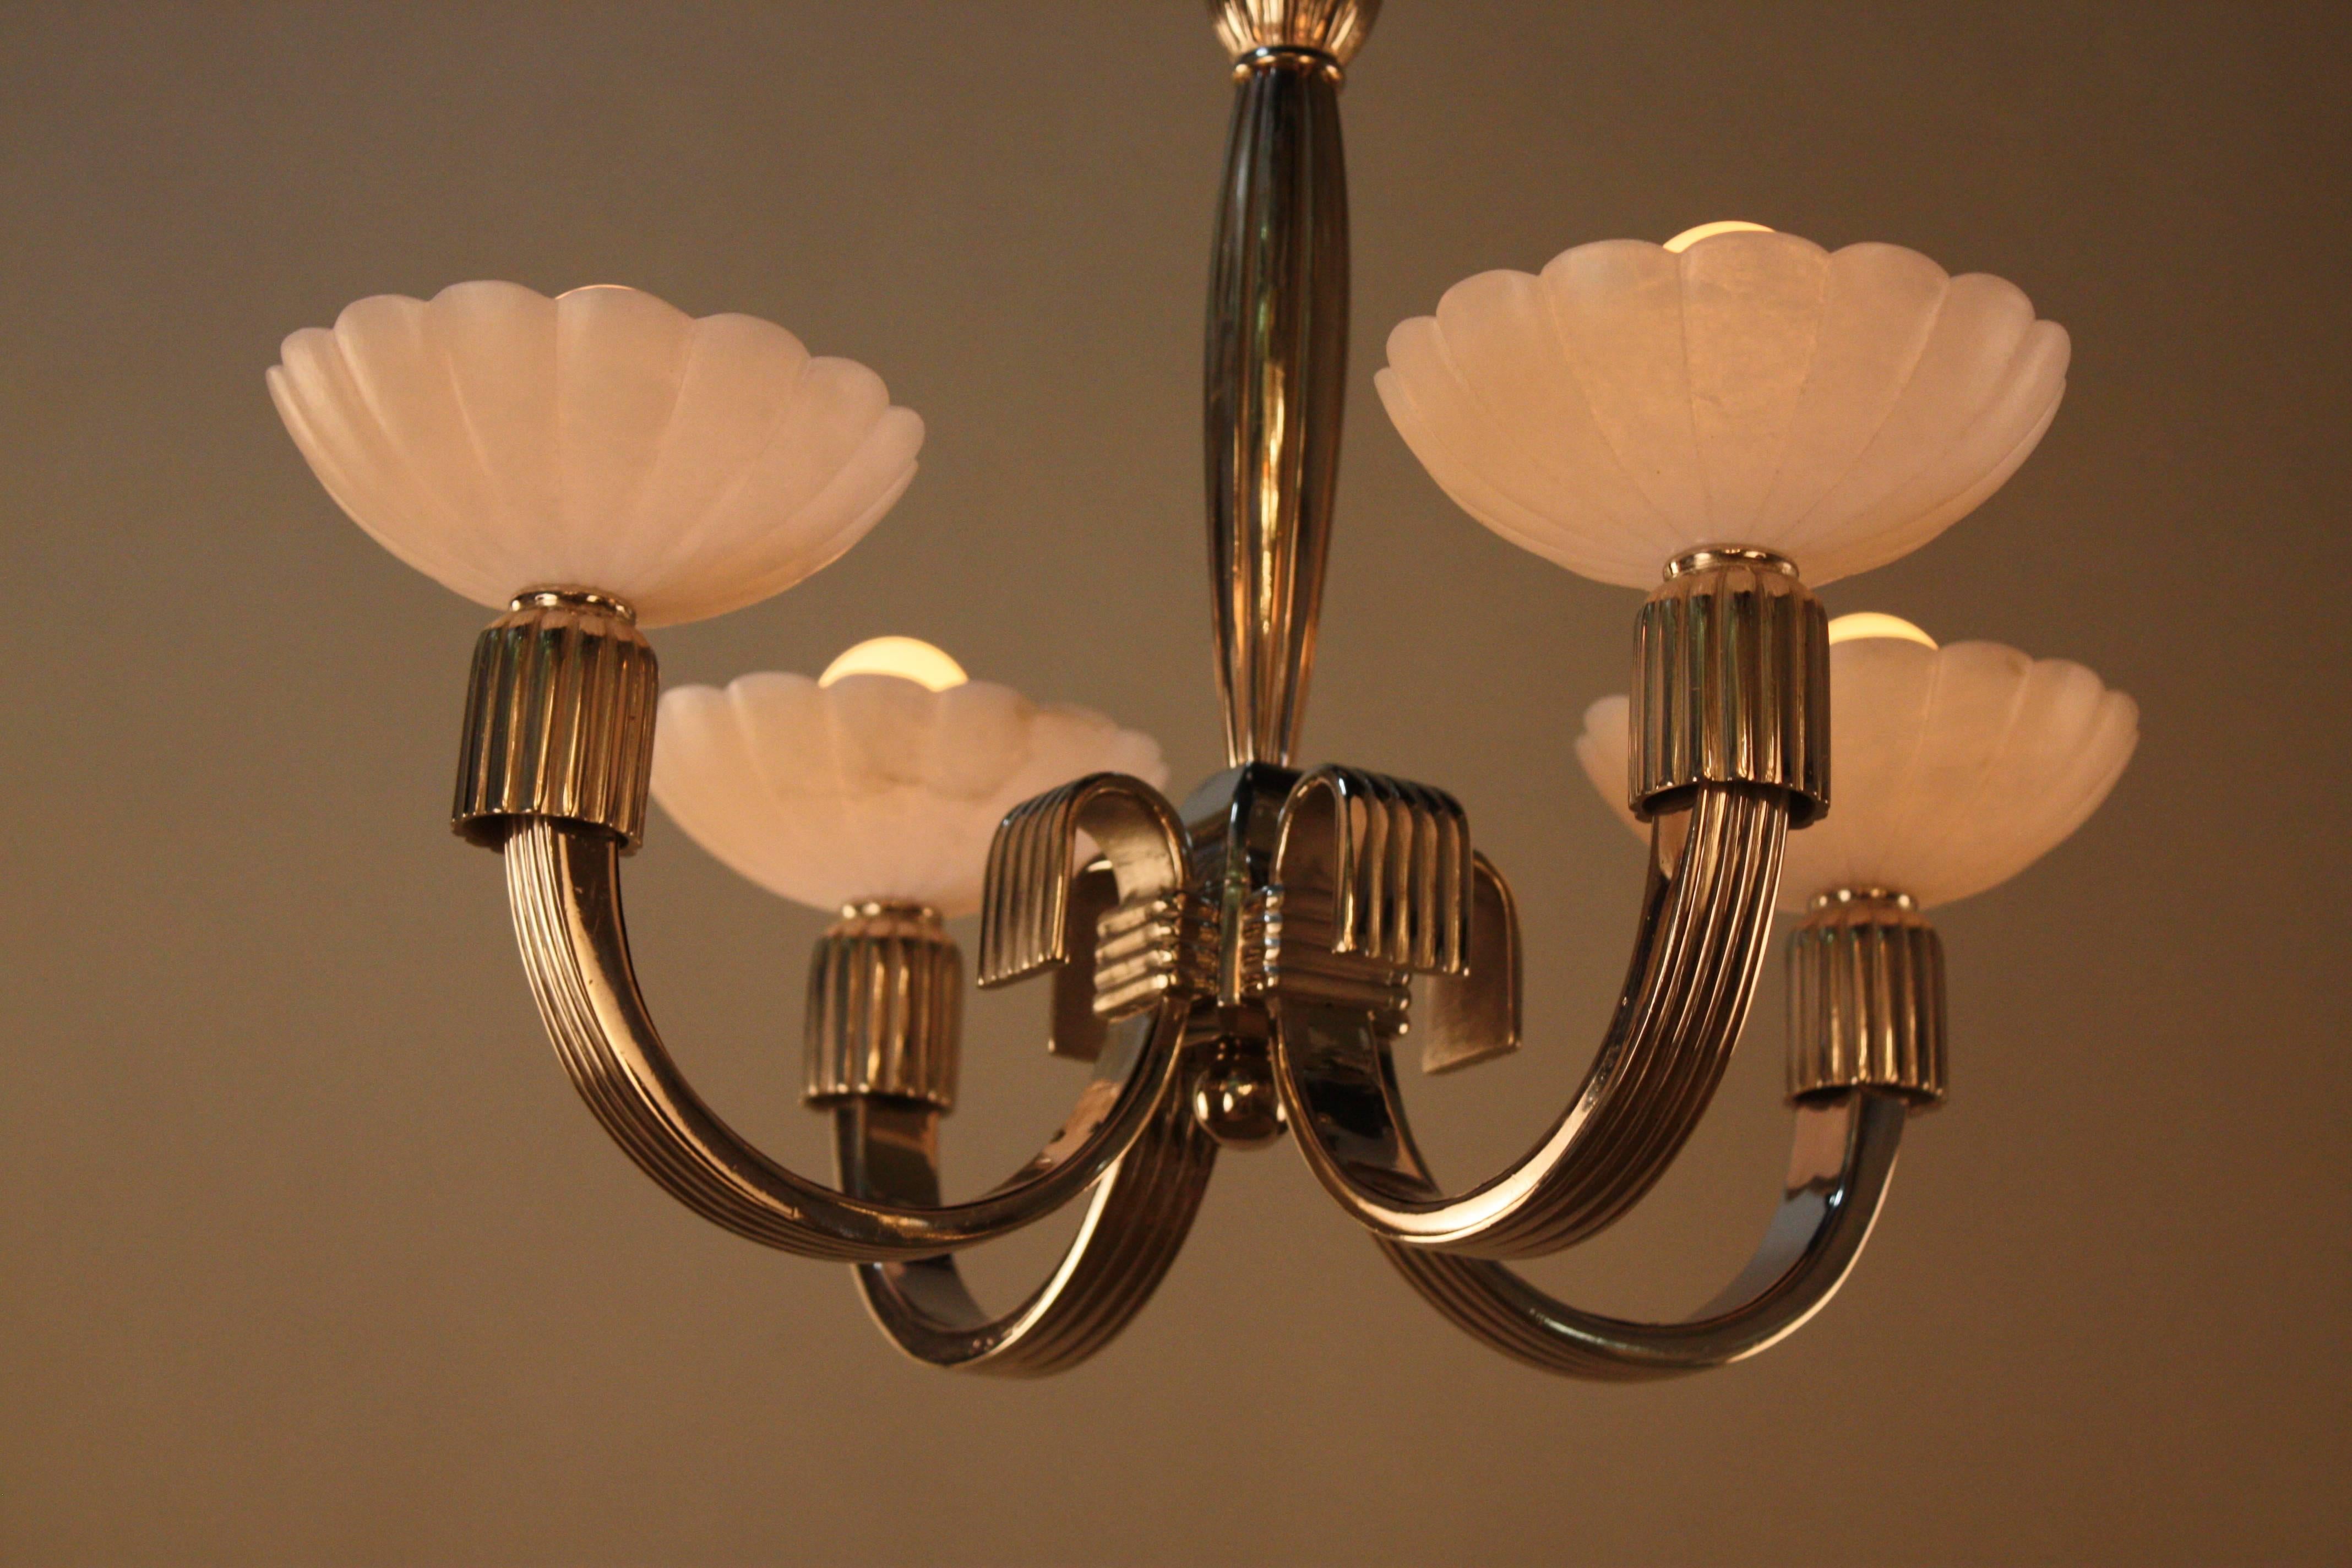 Simple but elegant nickel on bronze chandelier with alabaster shades.